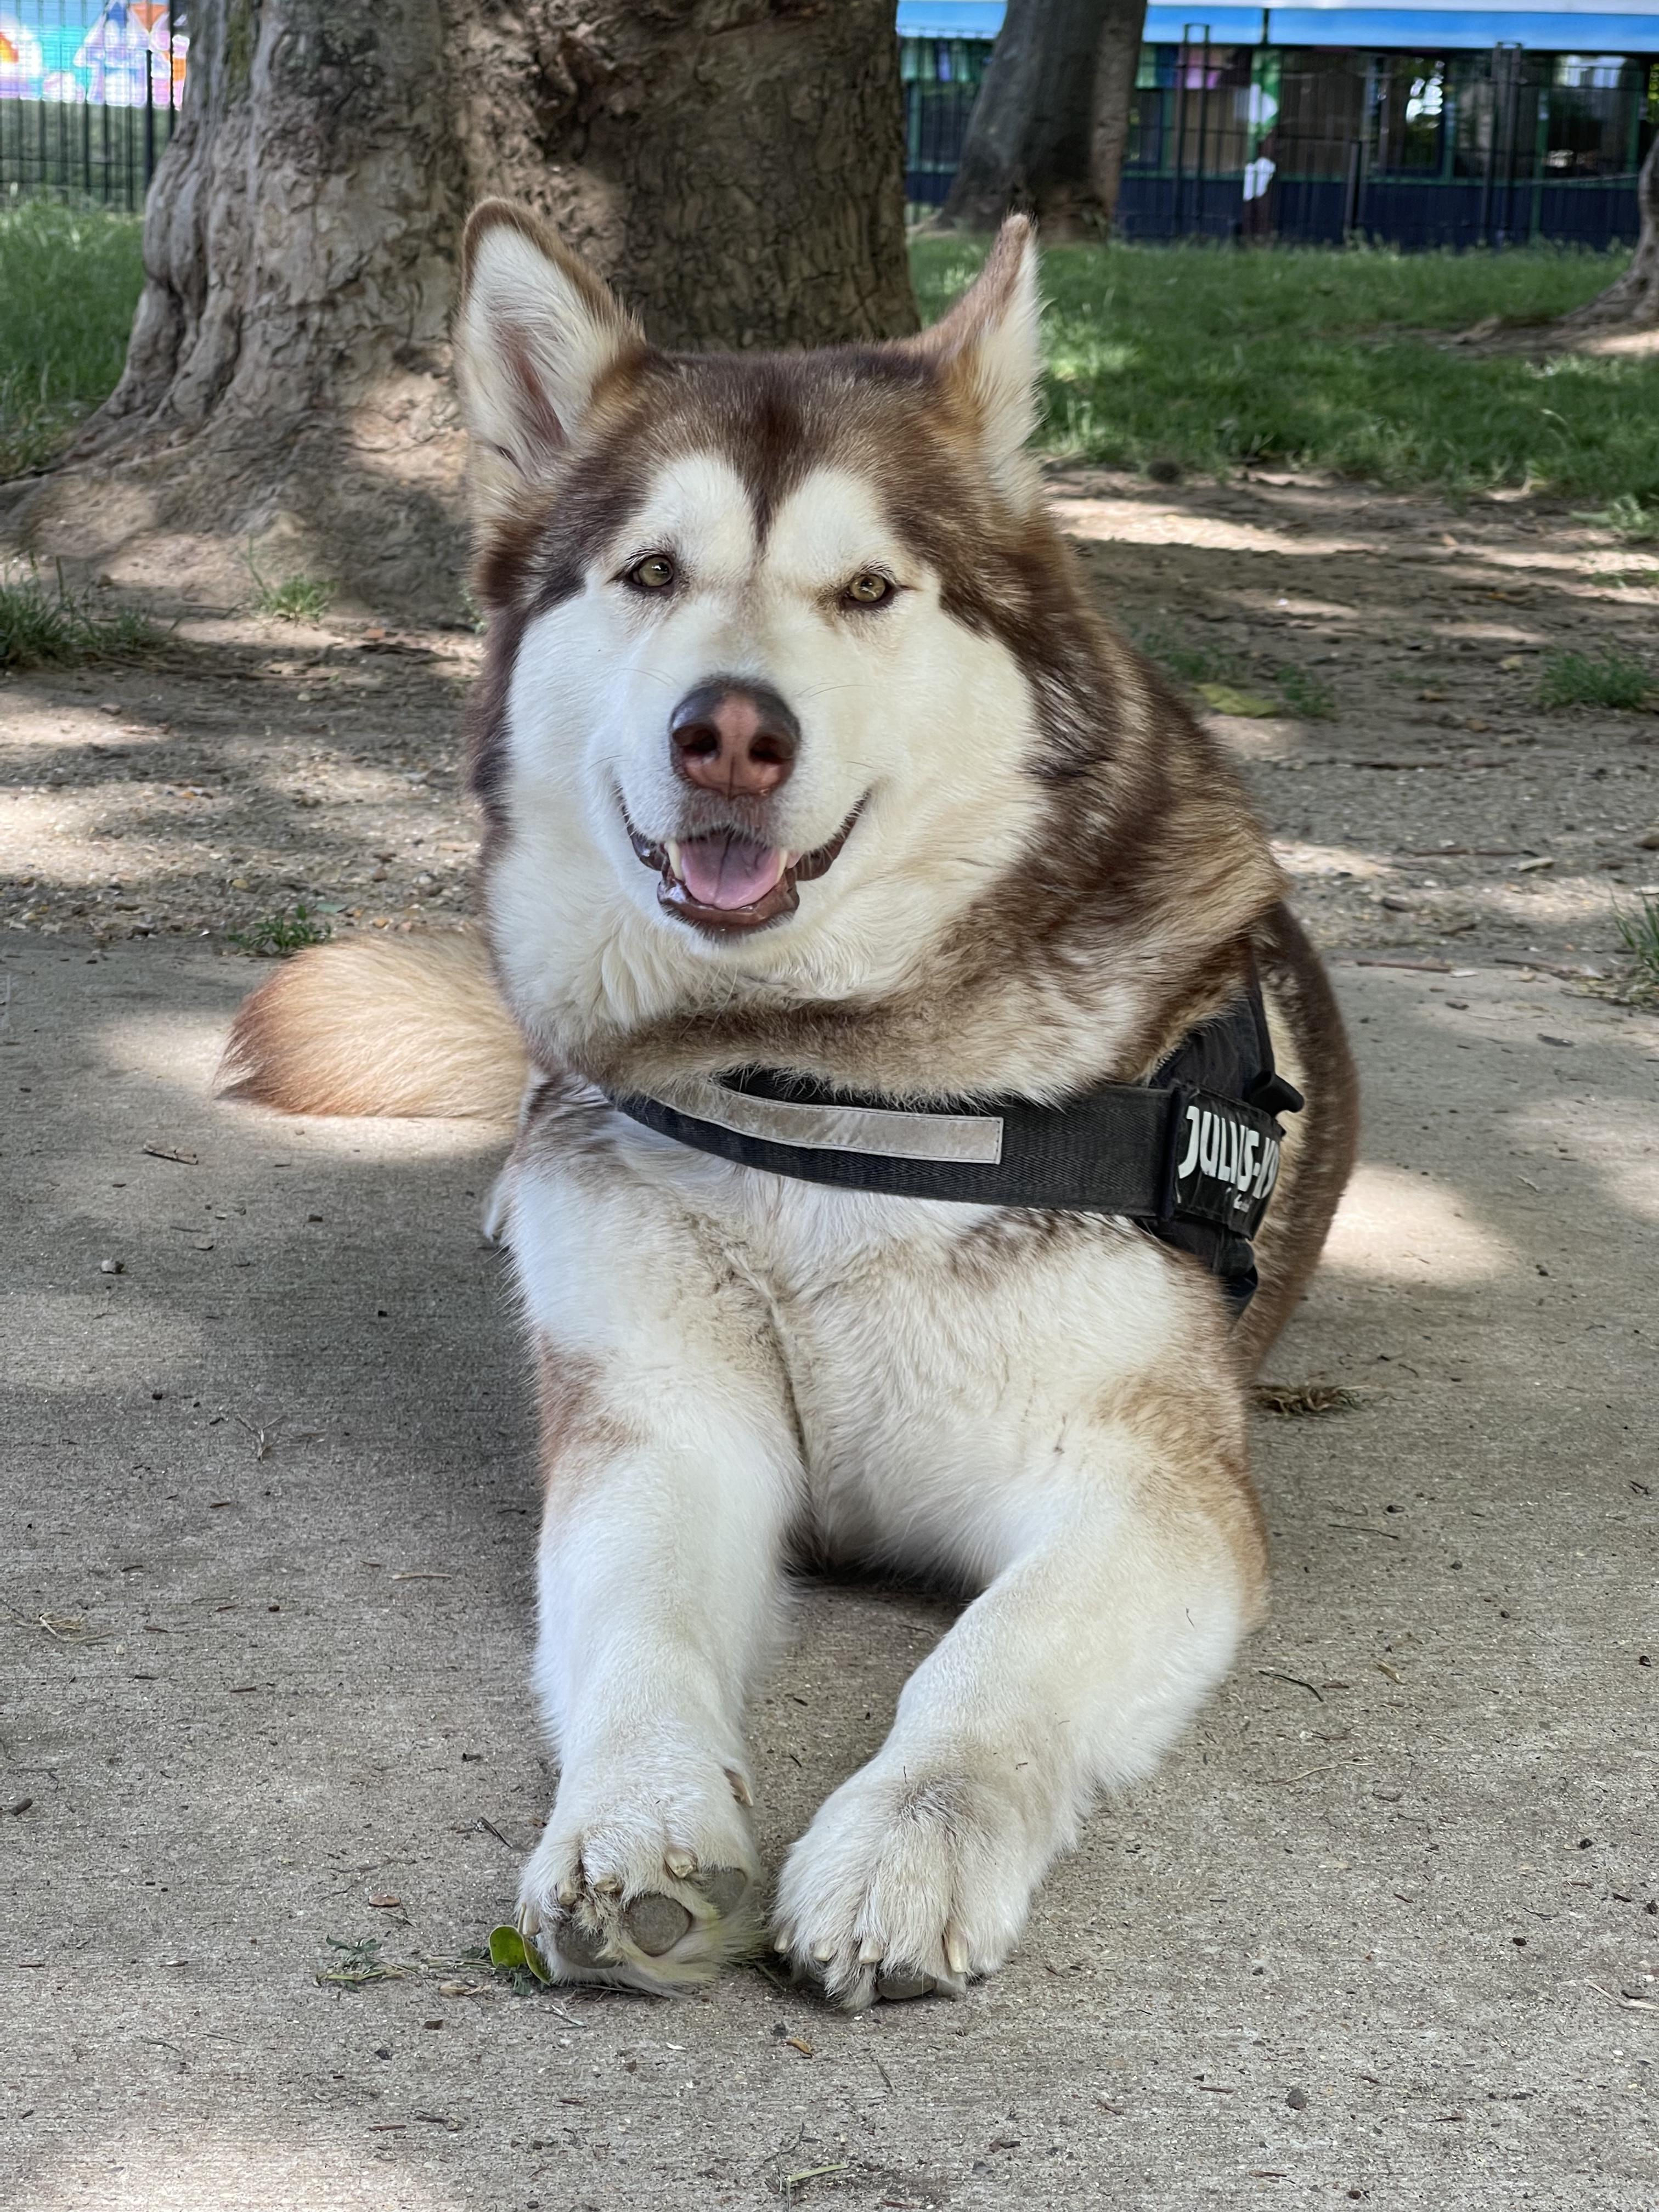 Ariel, the Alaskan Malamute wearing a Julius K9 dog harness